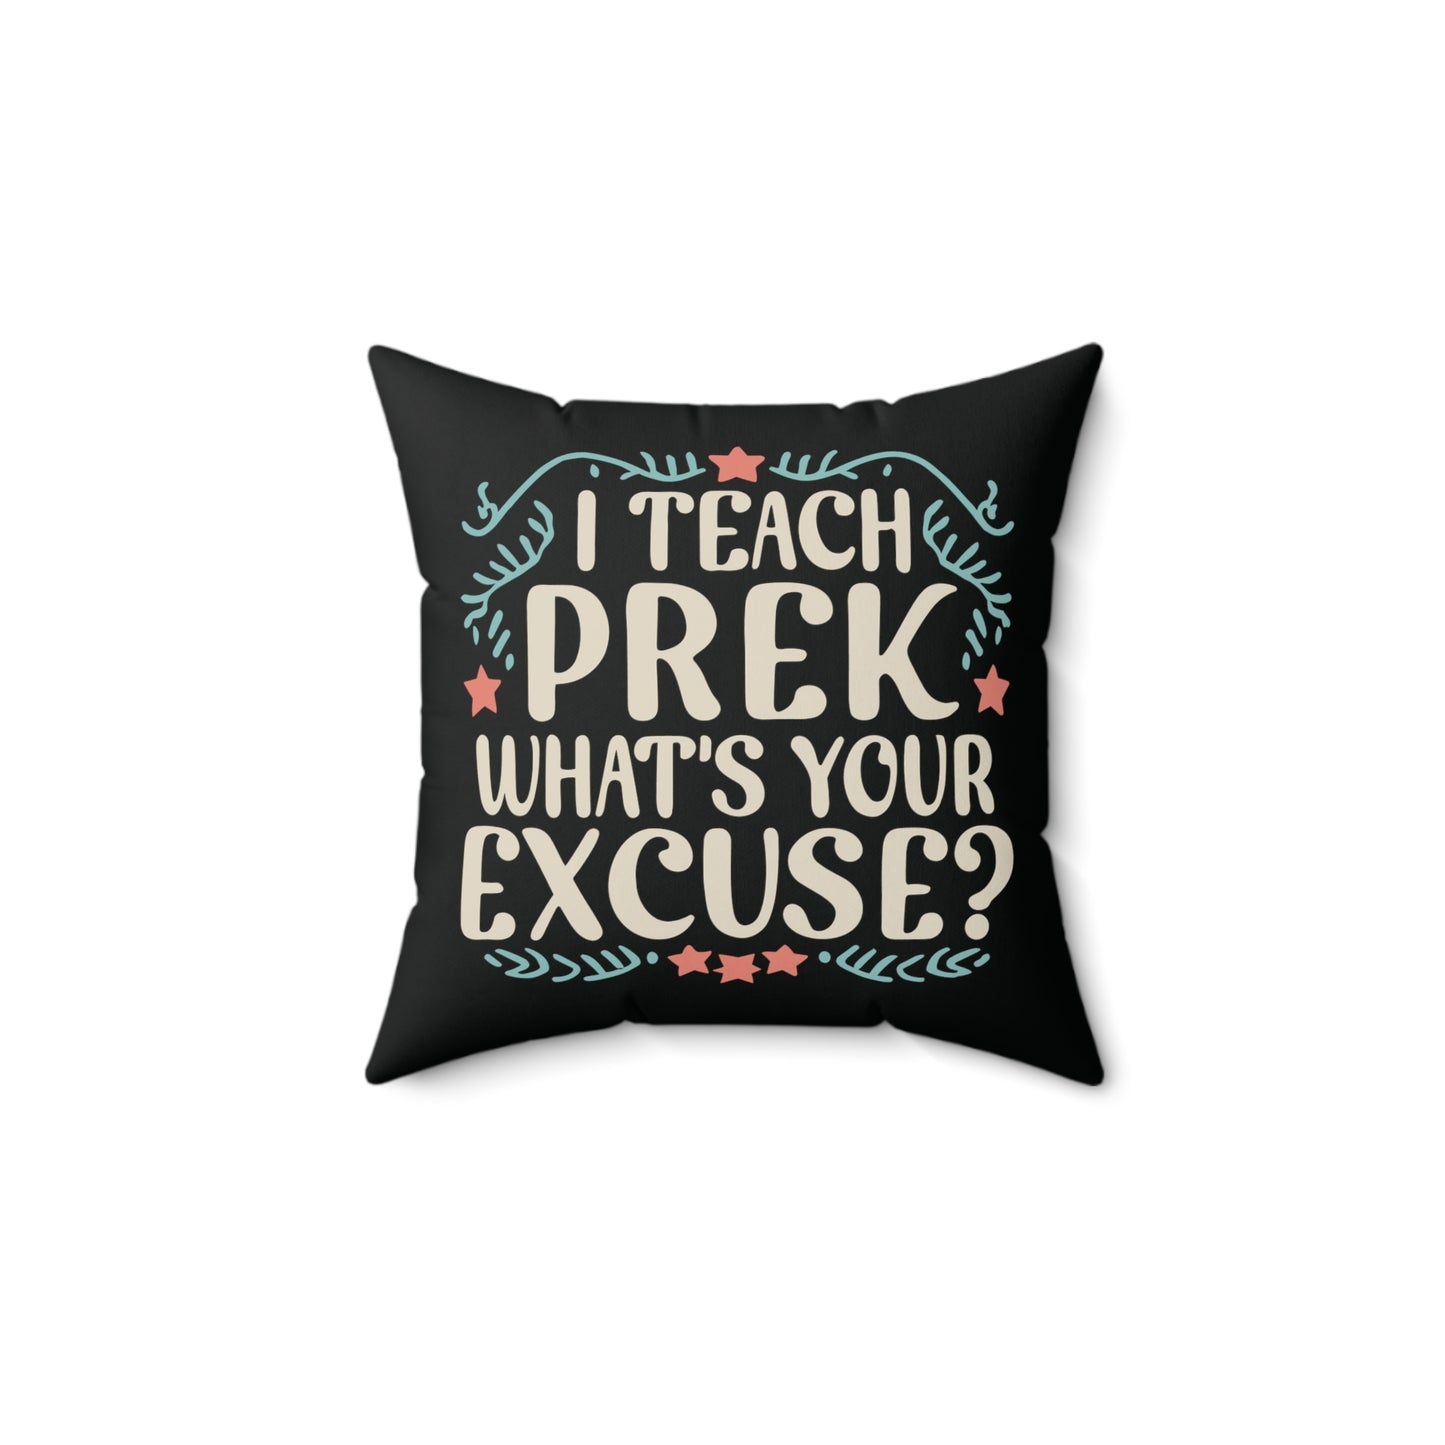 PreK Teacher Pillow - "I Teach PreK - What's Your Excuse"